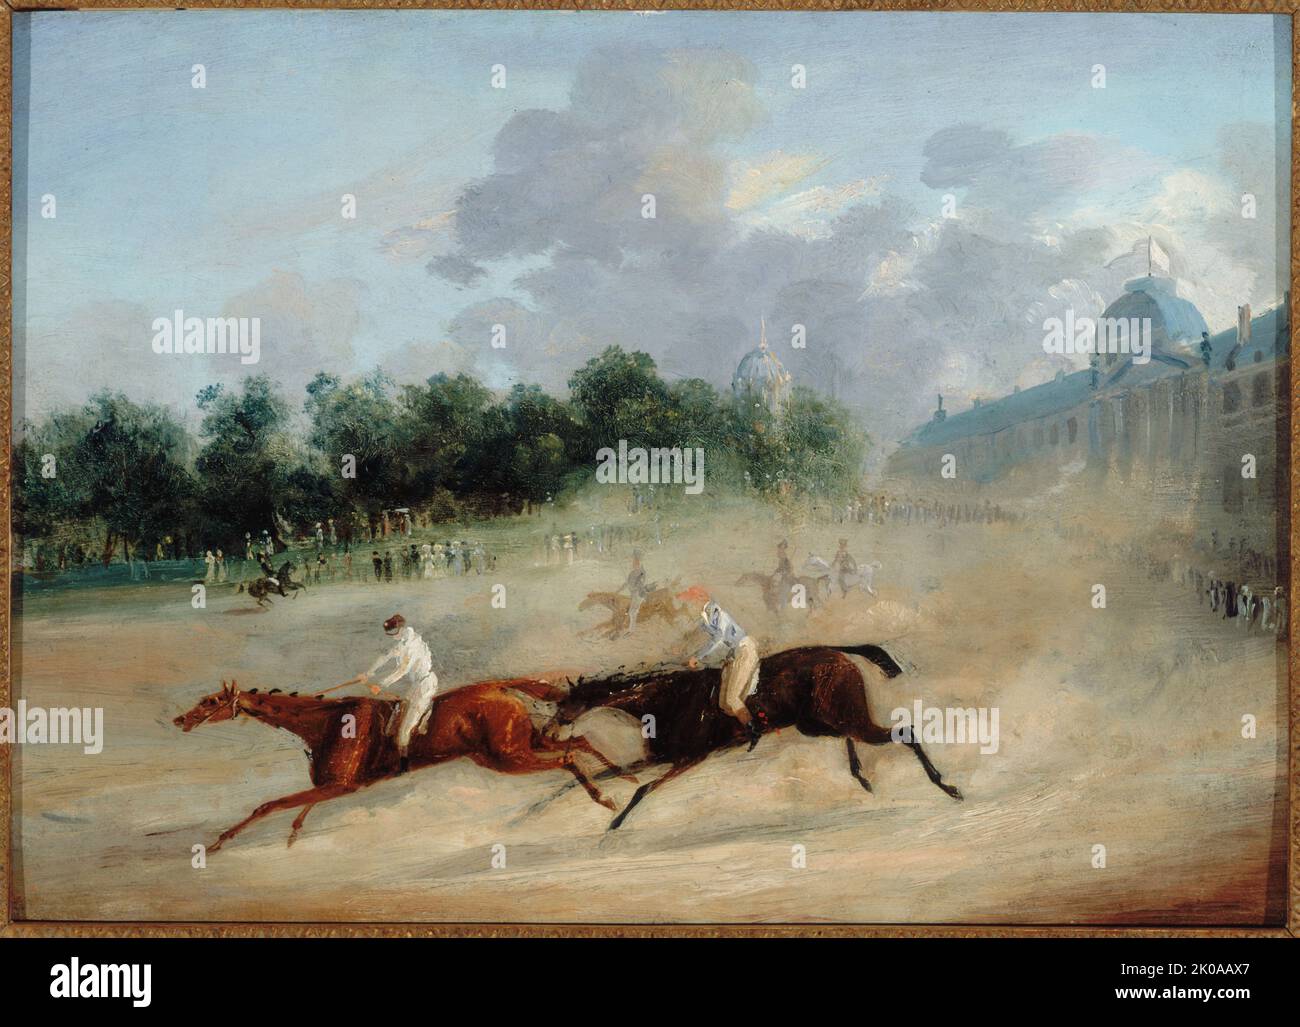 Race at the Champ-de-Mars, around 1825. Stock Photo